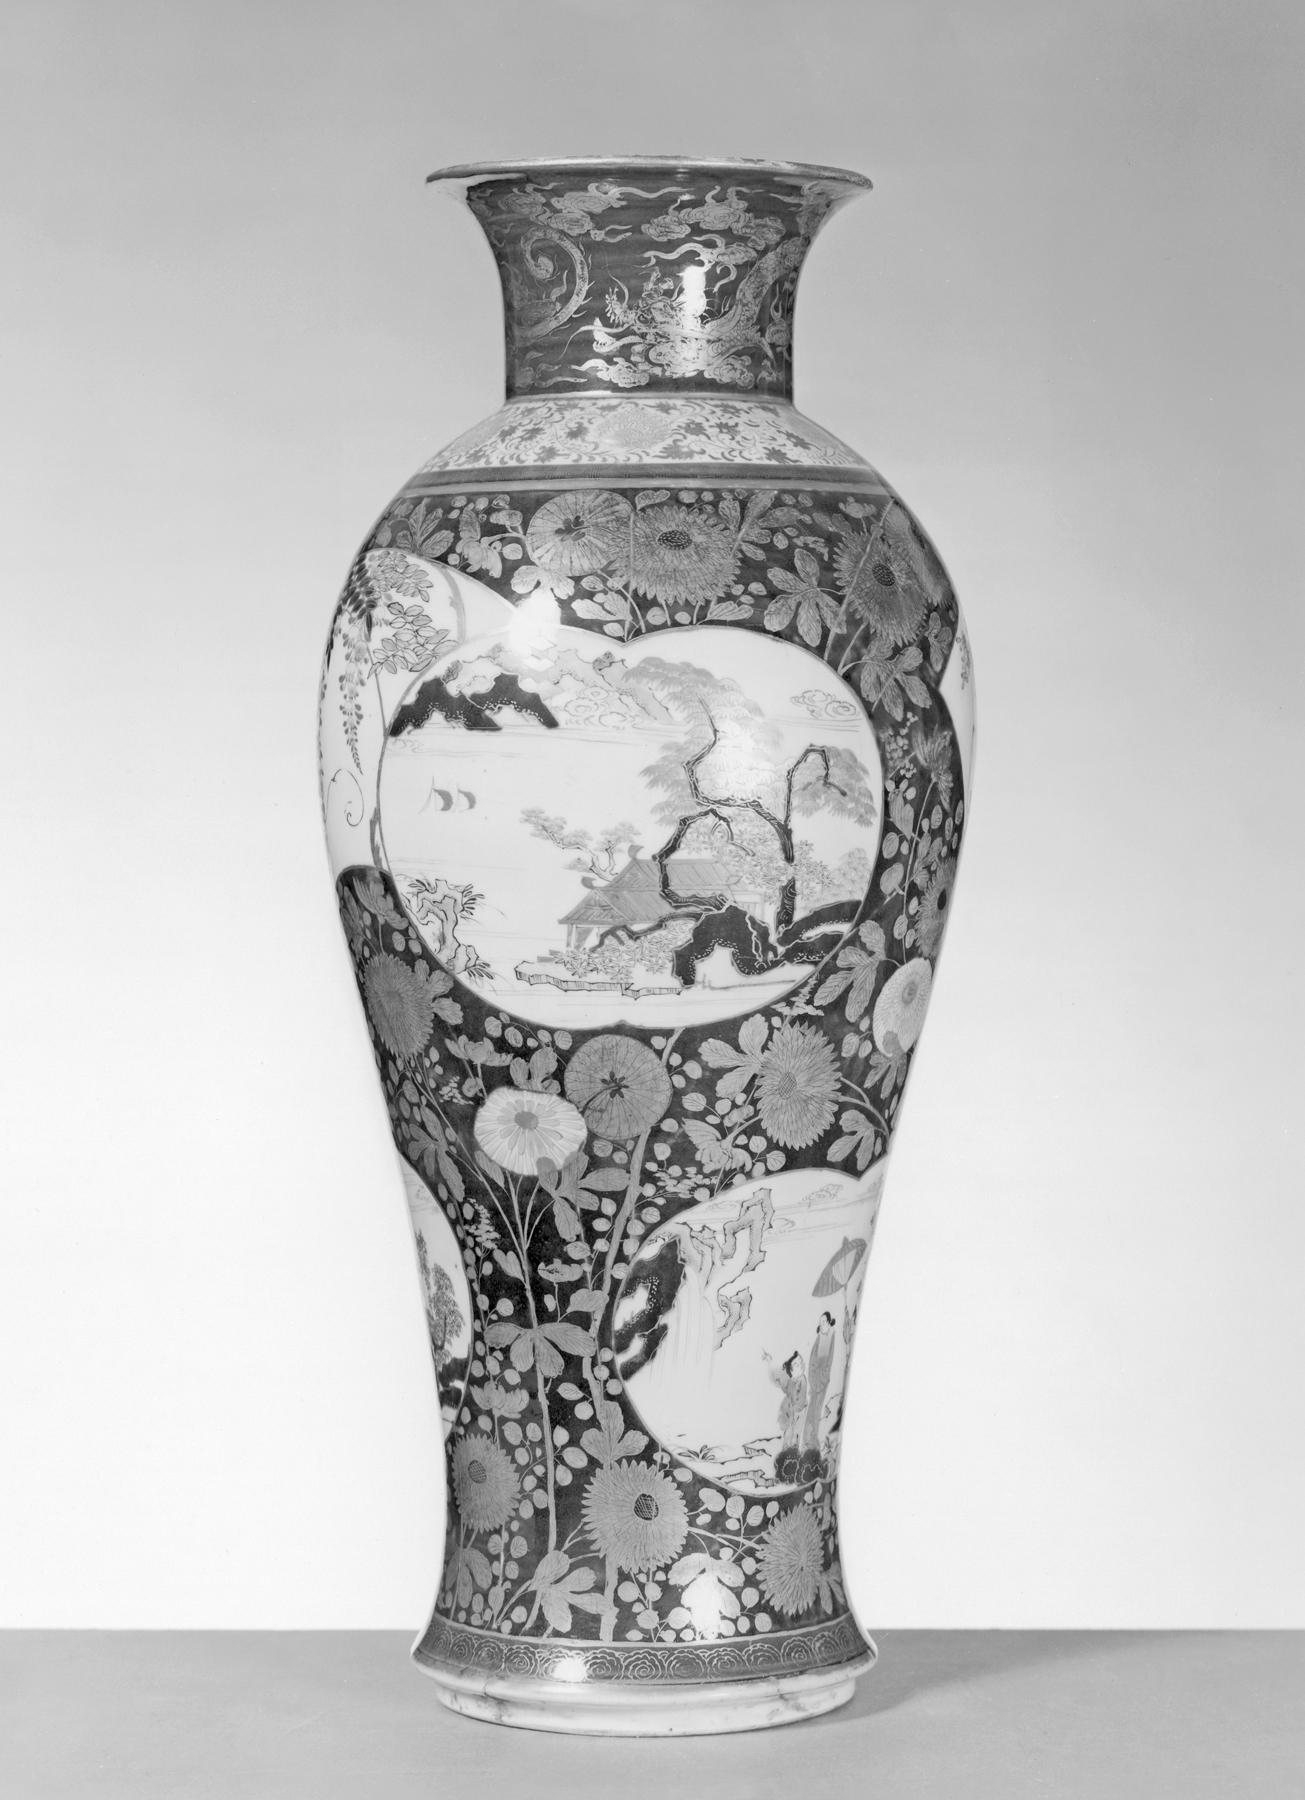 Image for "Old Japan" Imari Vase